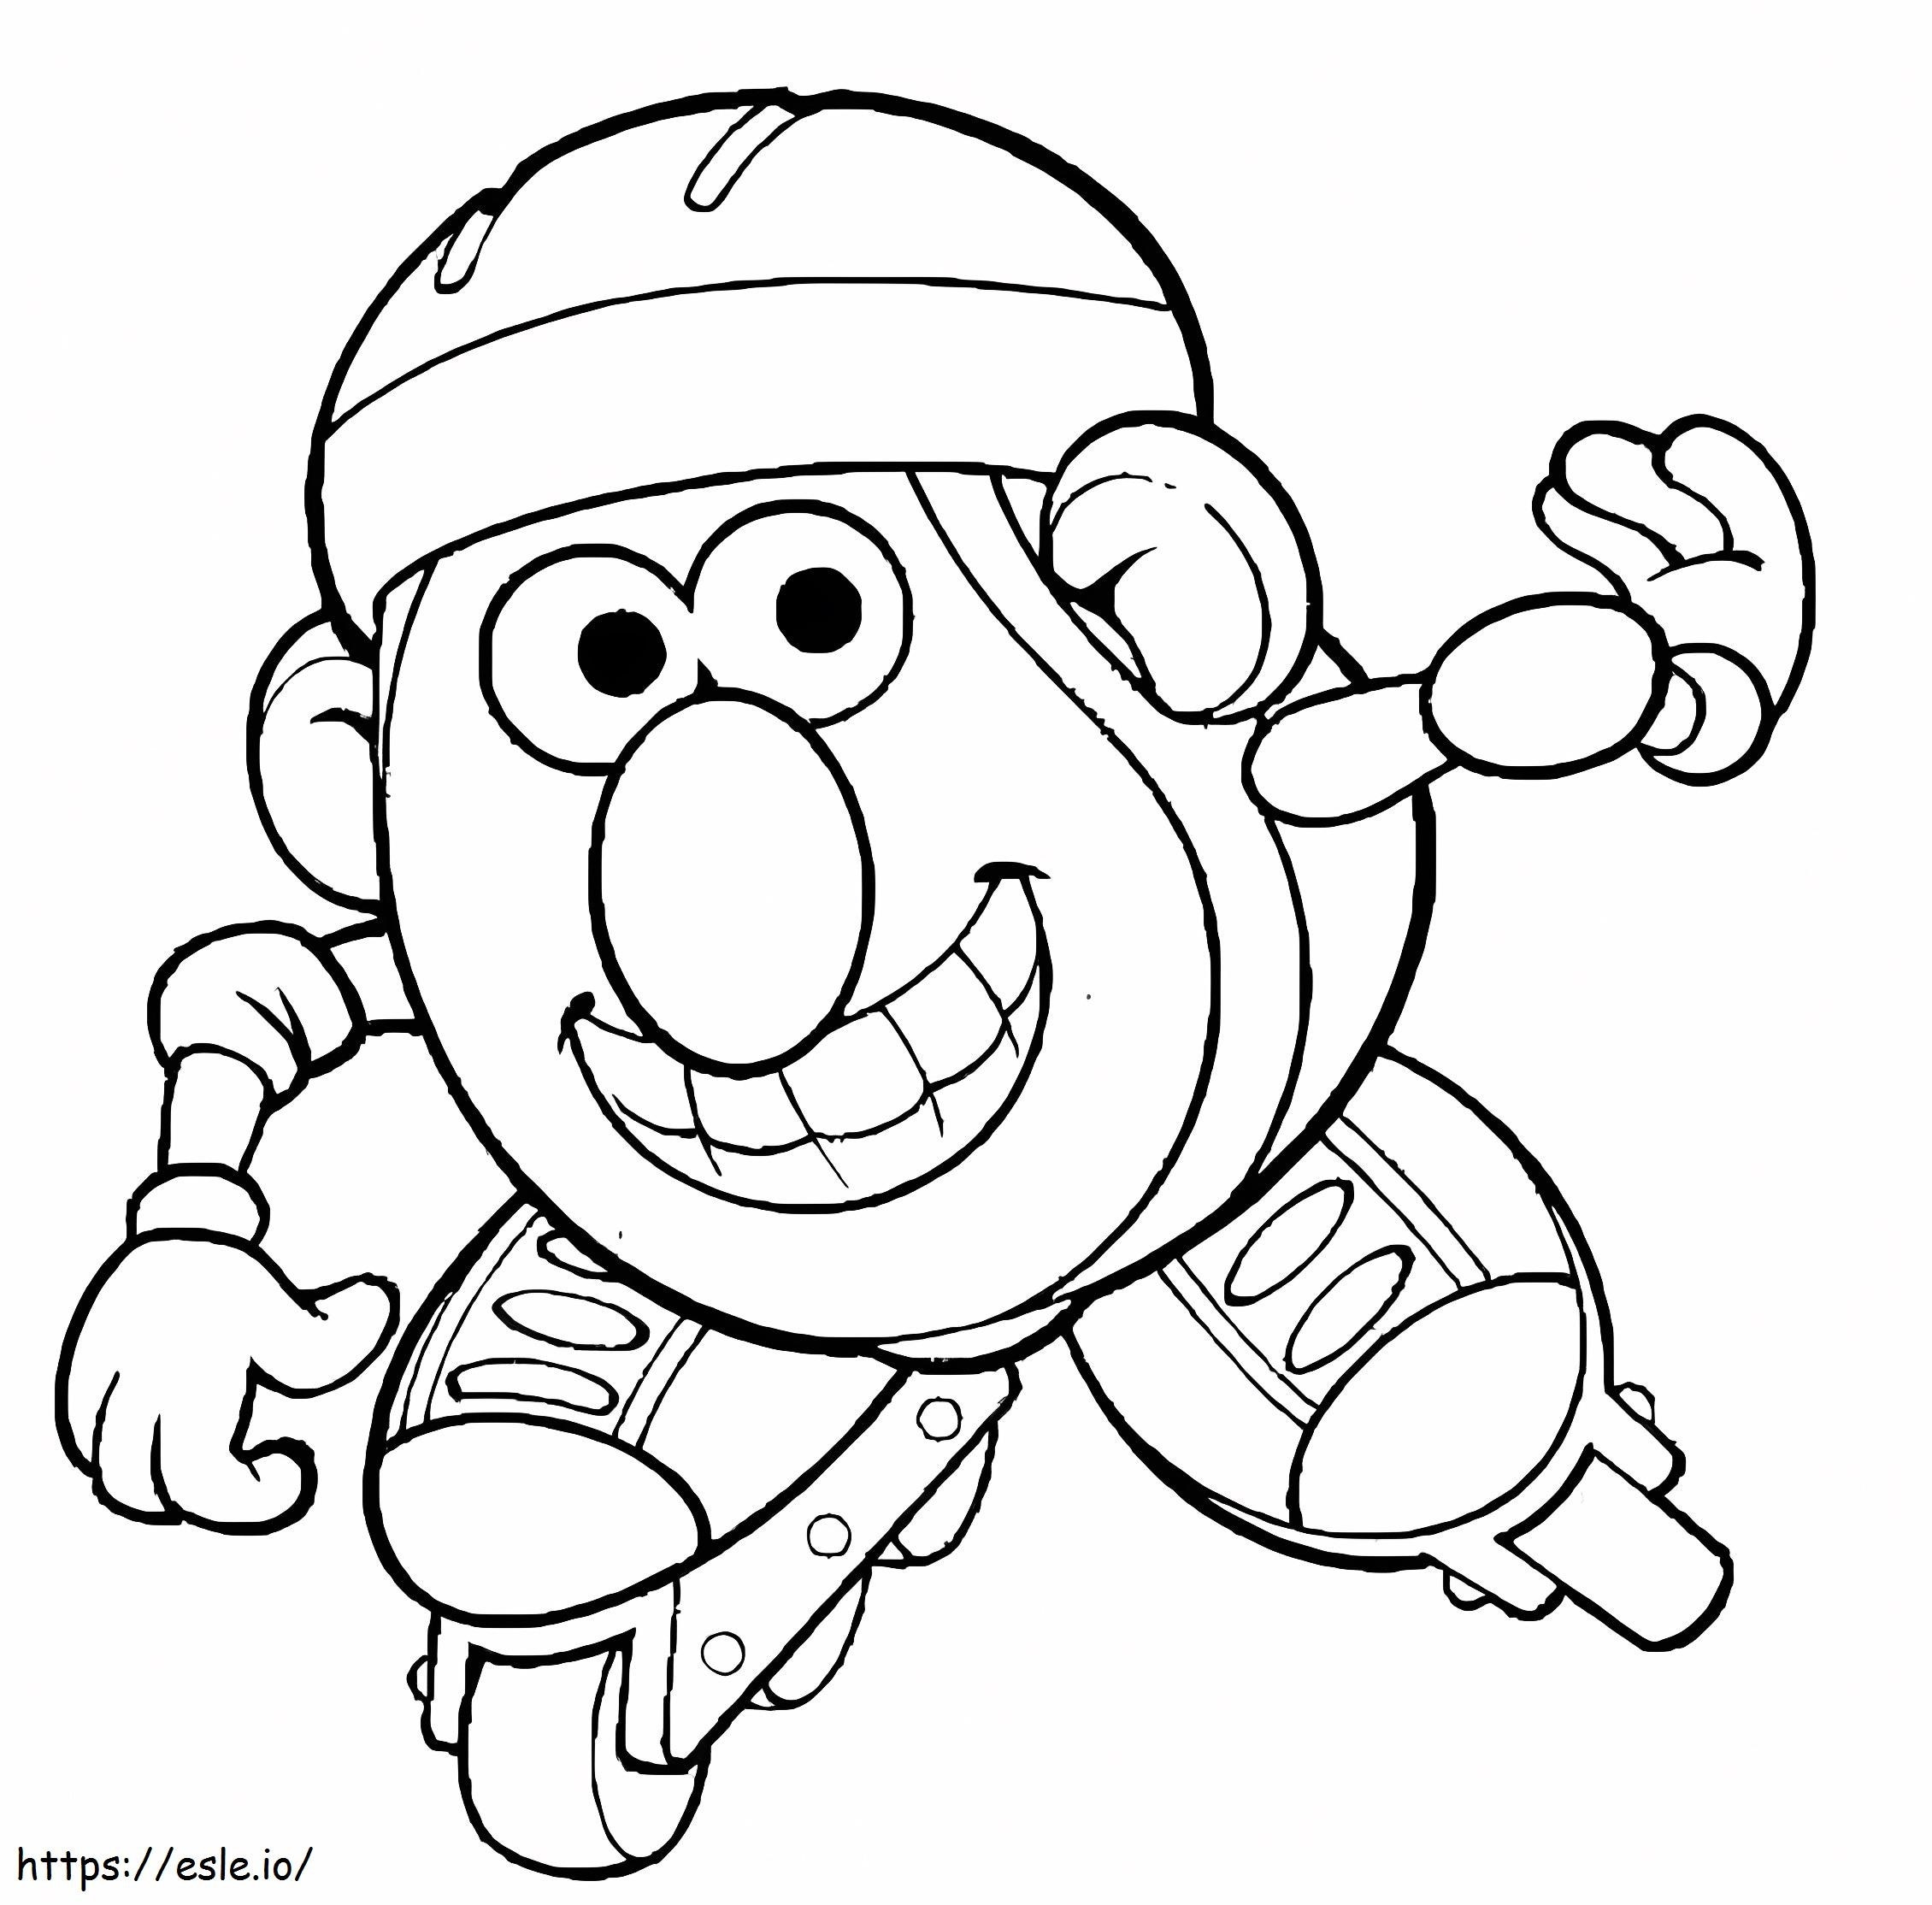 Mr. Potato Head Smiling coloring page